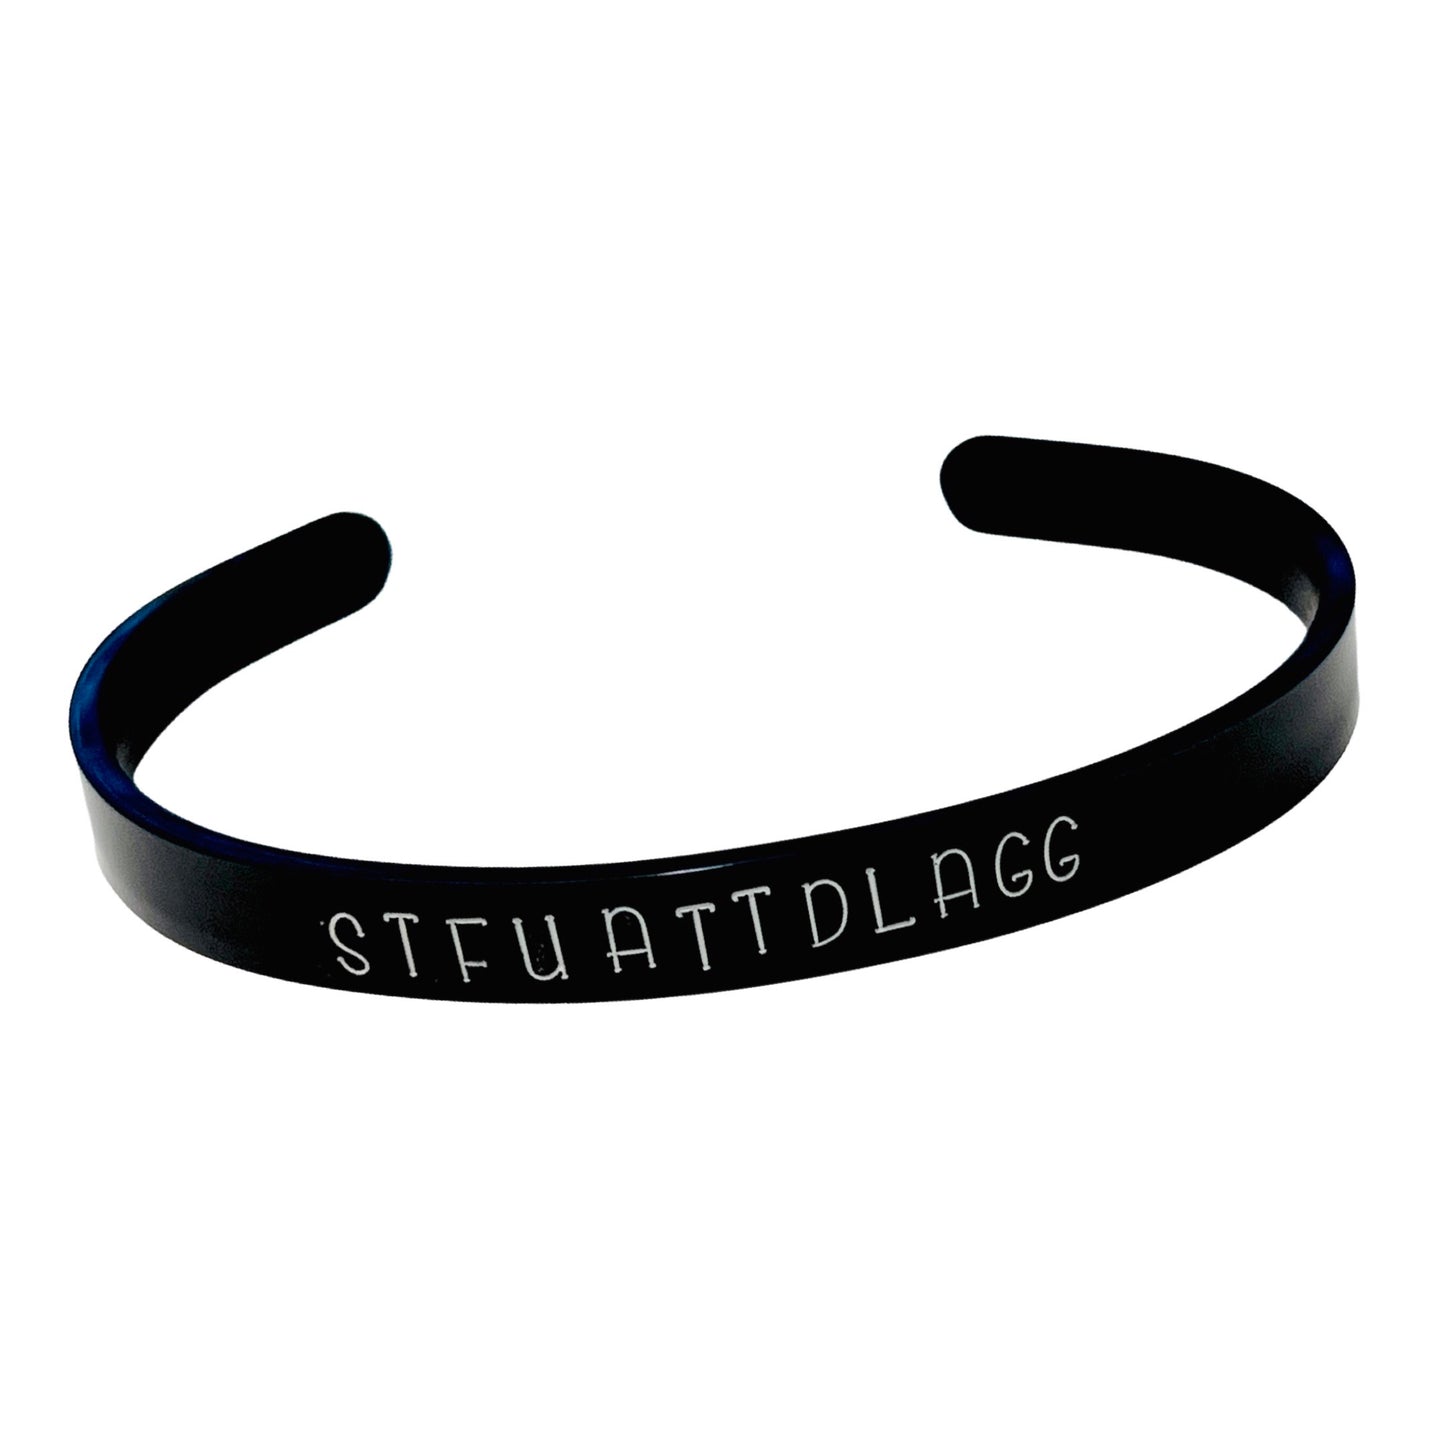 STFUATTDLAGG - Cuff Bracelet